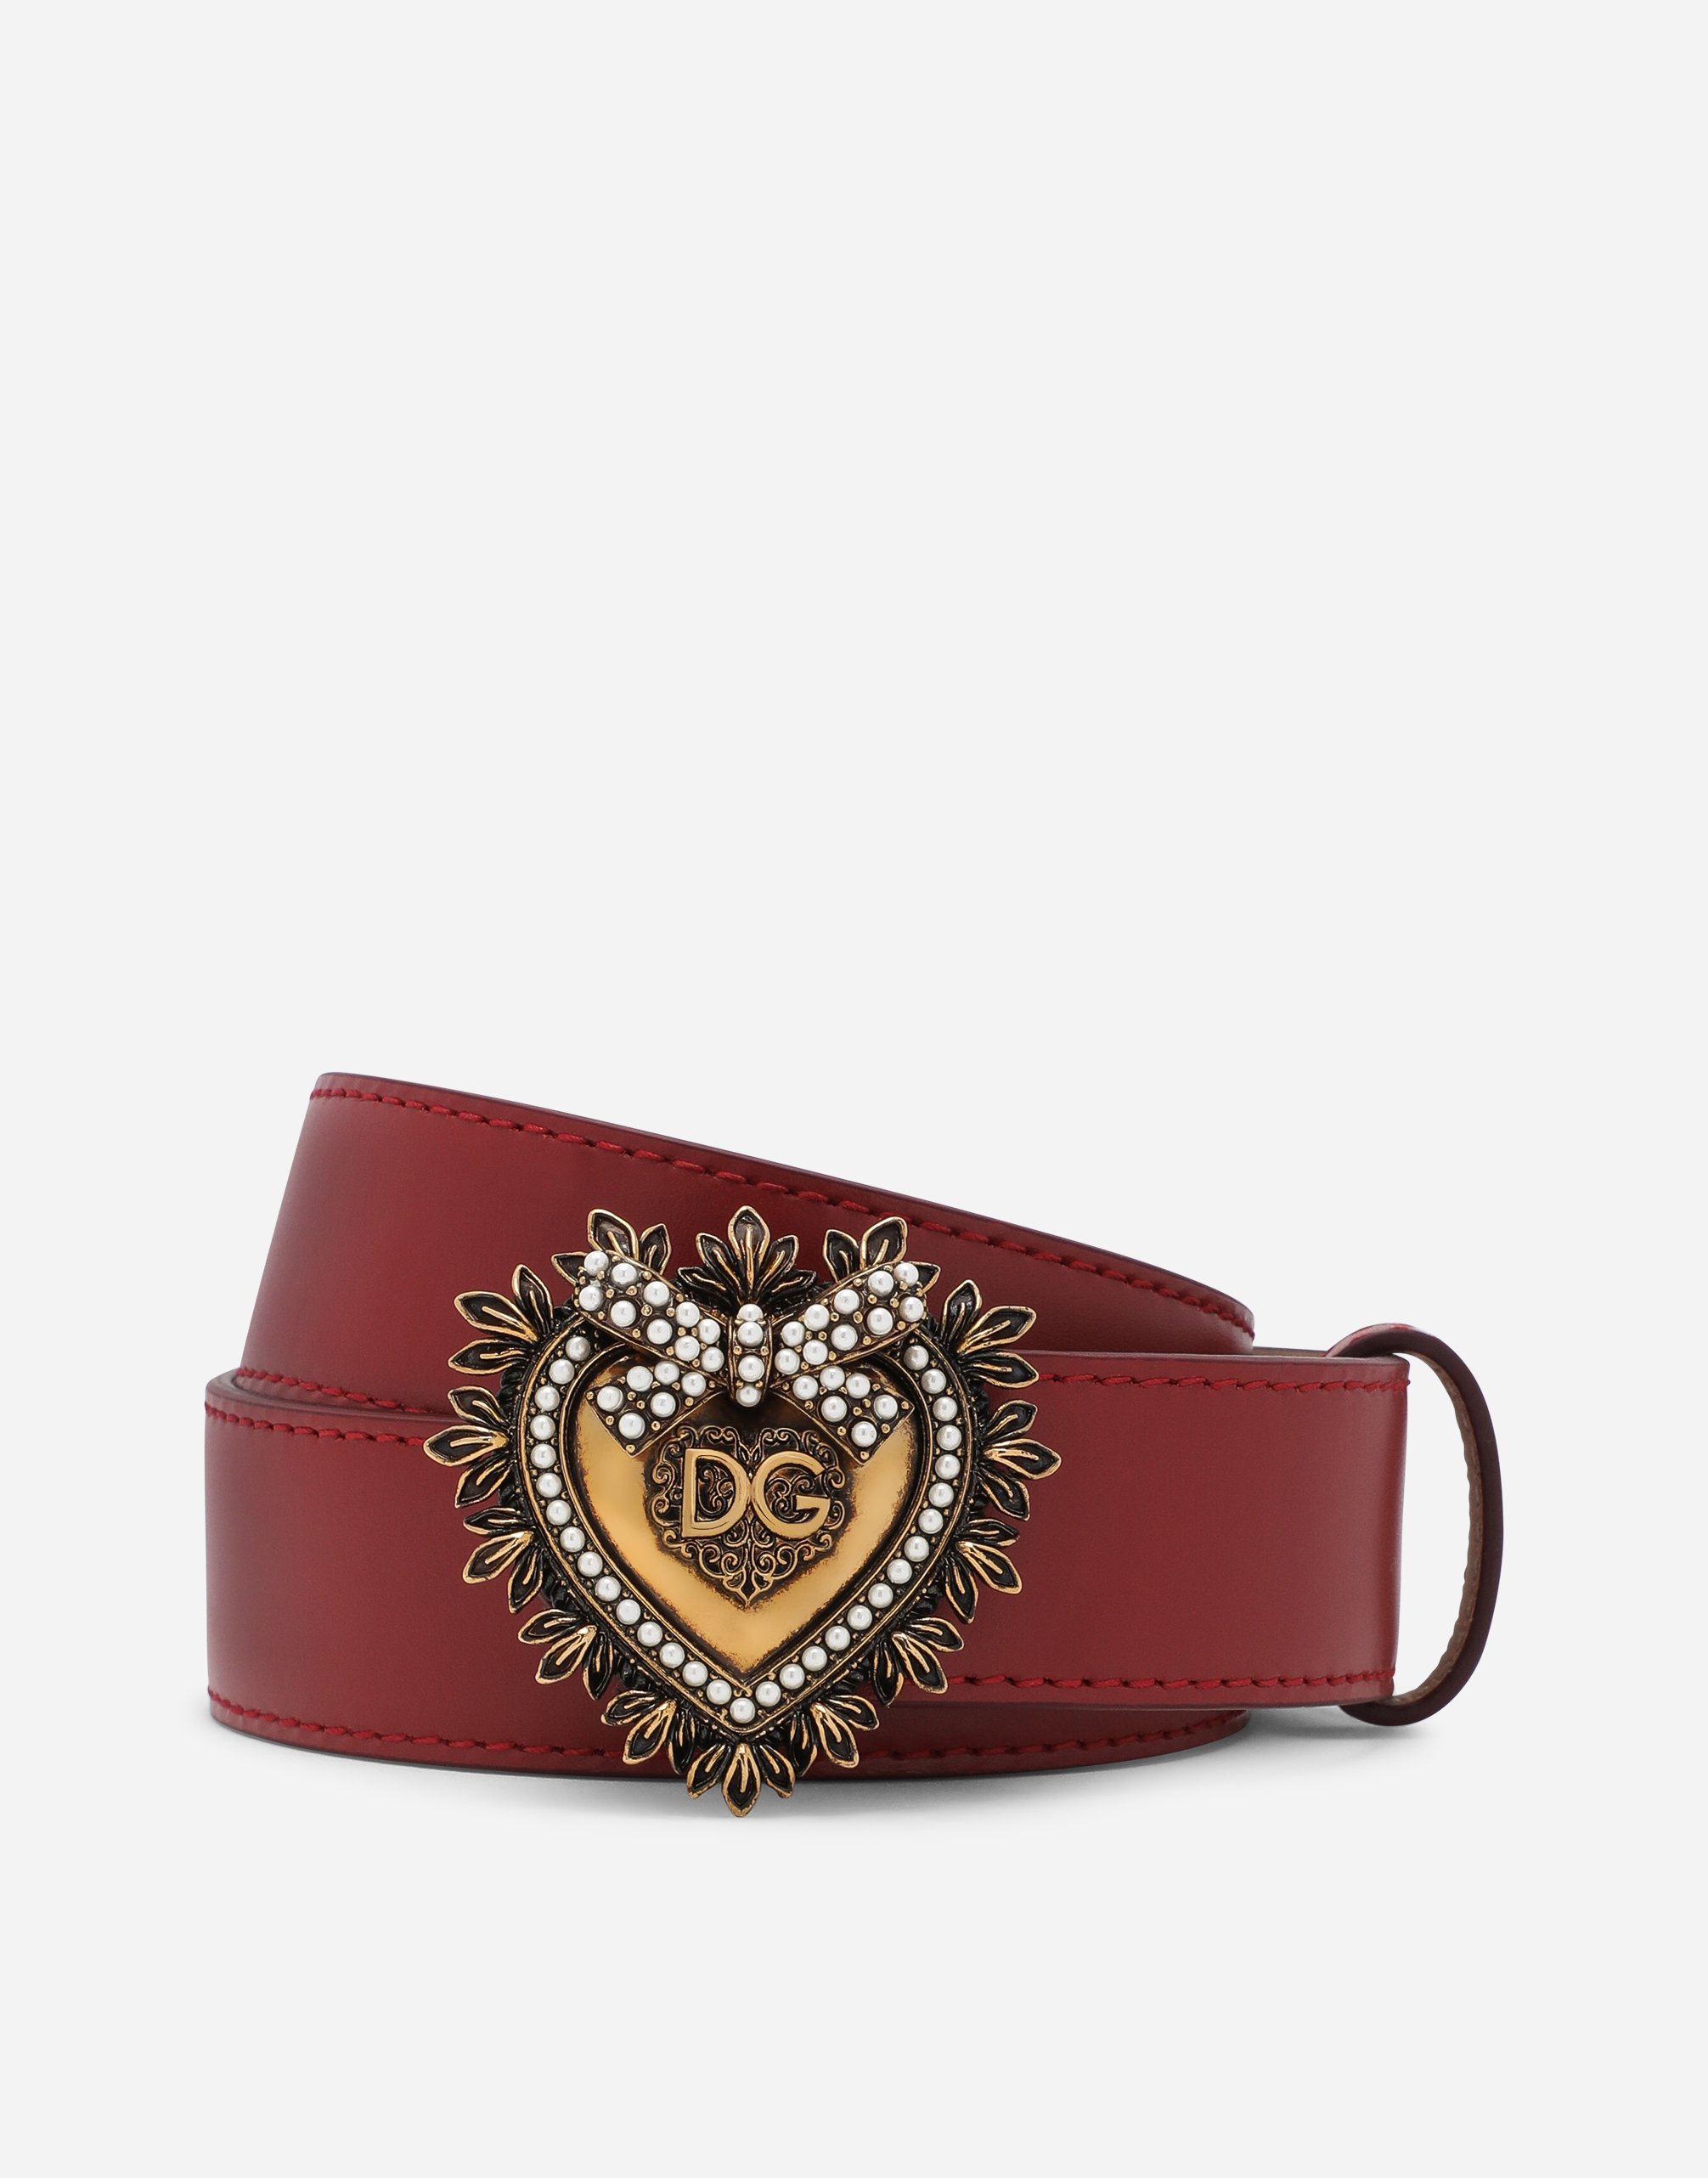 Devotion belt in lux leather in Red